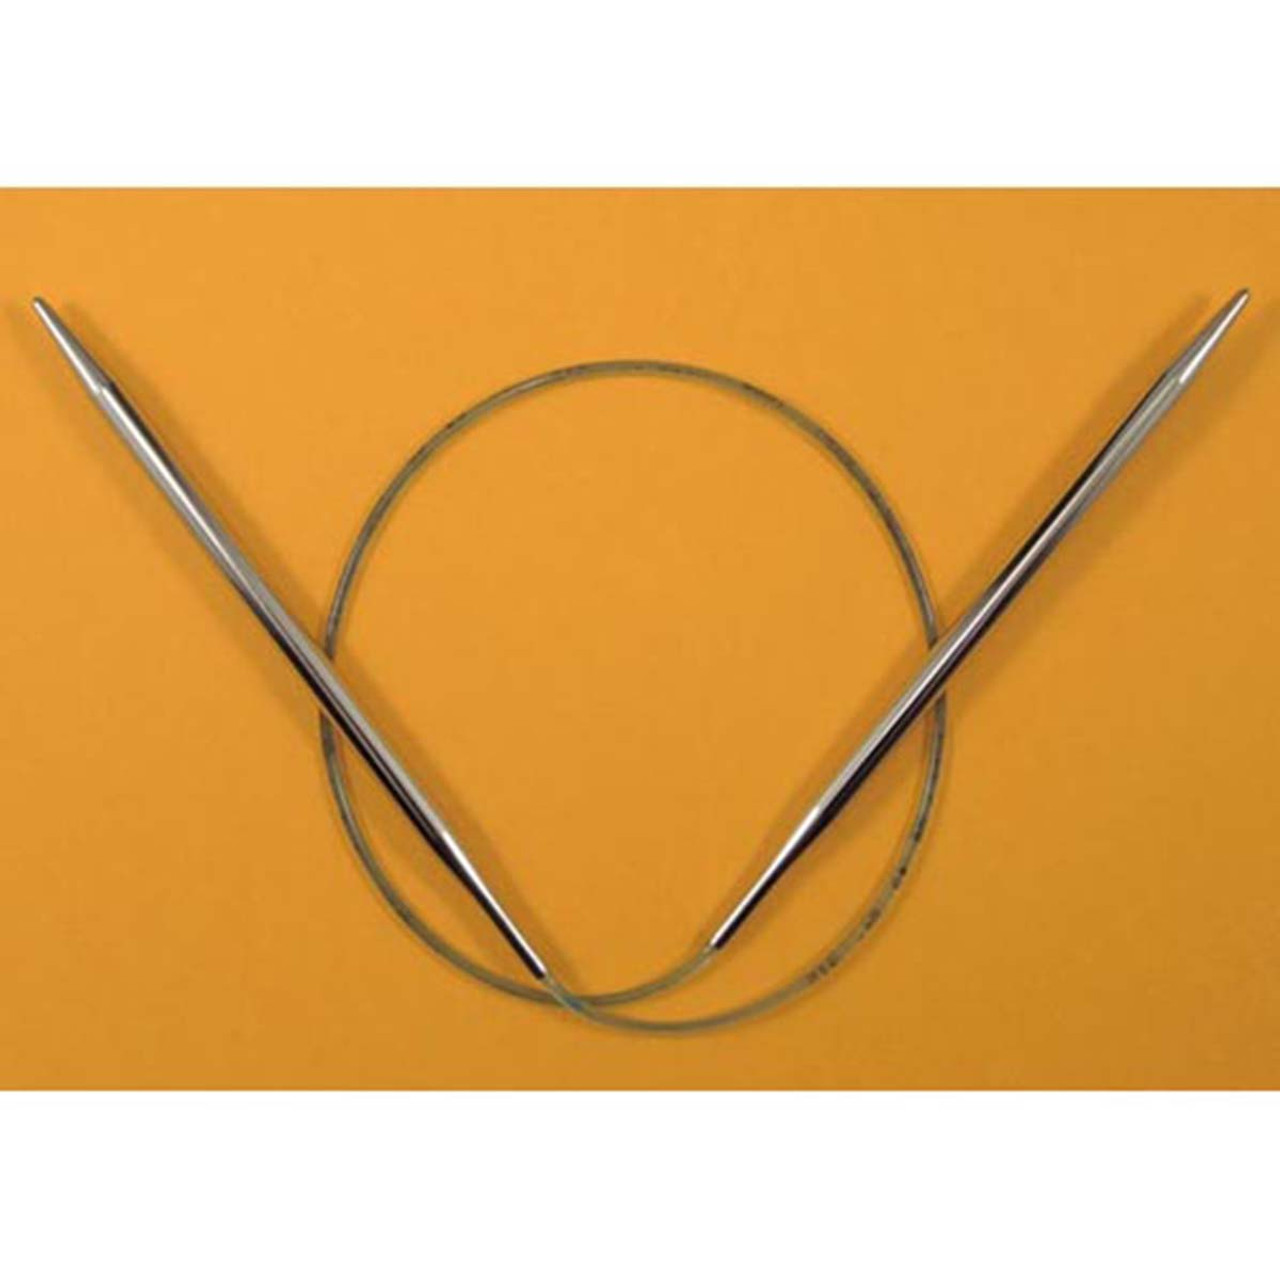 40 Addi Rocket SQUARED Fixed Circular Needles-addi Rocket Squared Needles-addi  Knitting Needles-addi Rocket Circular Knitting Needles 